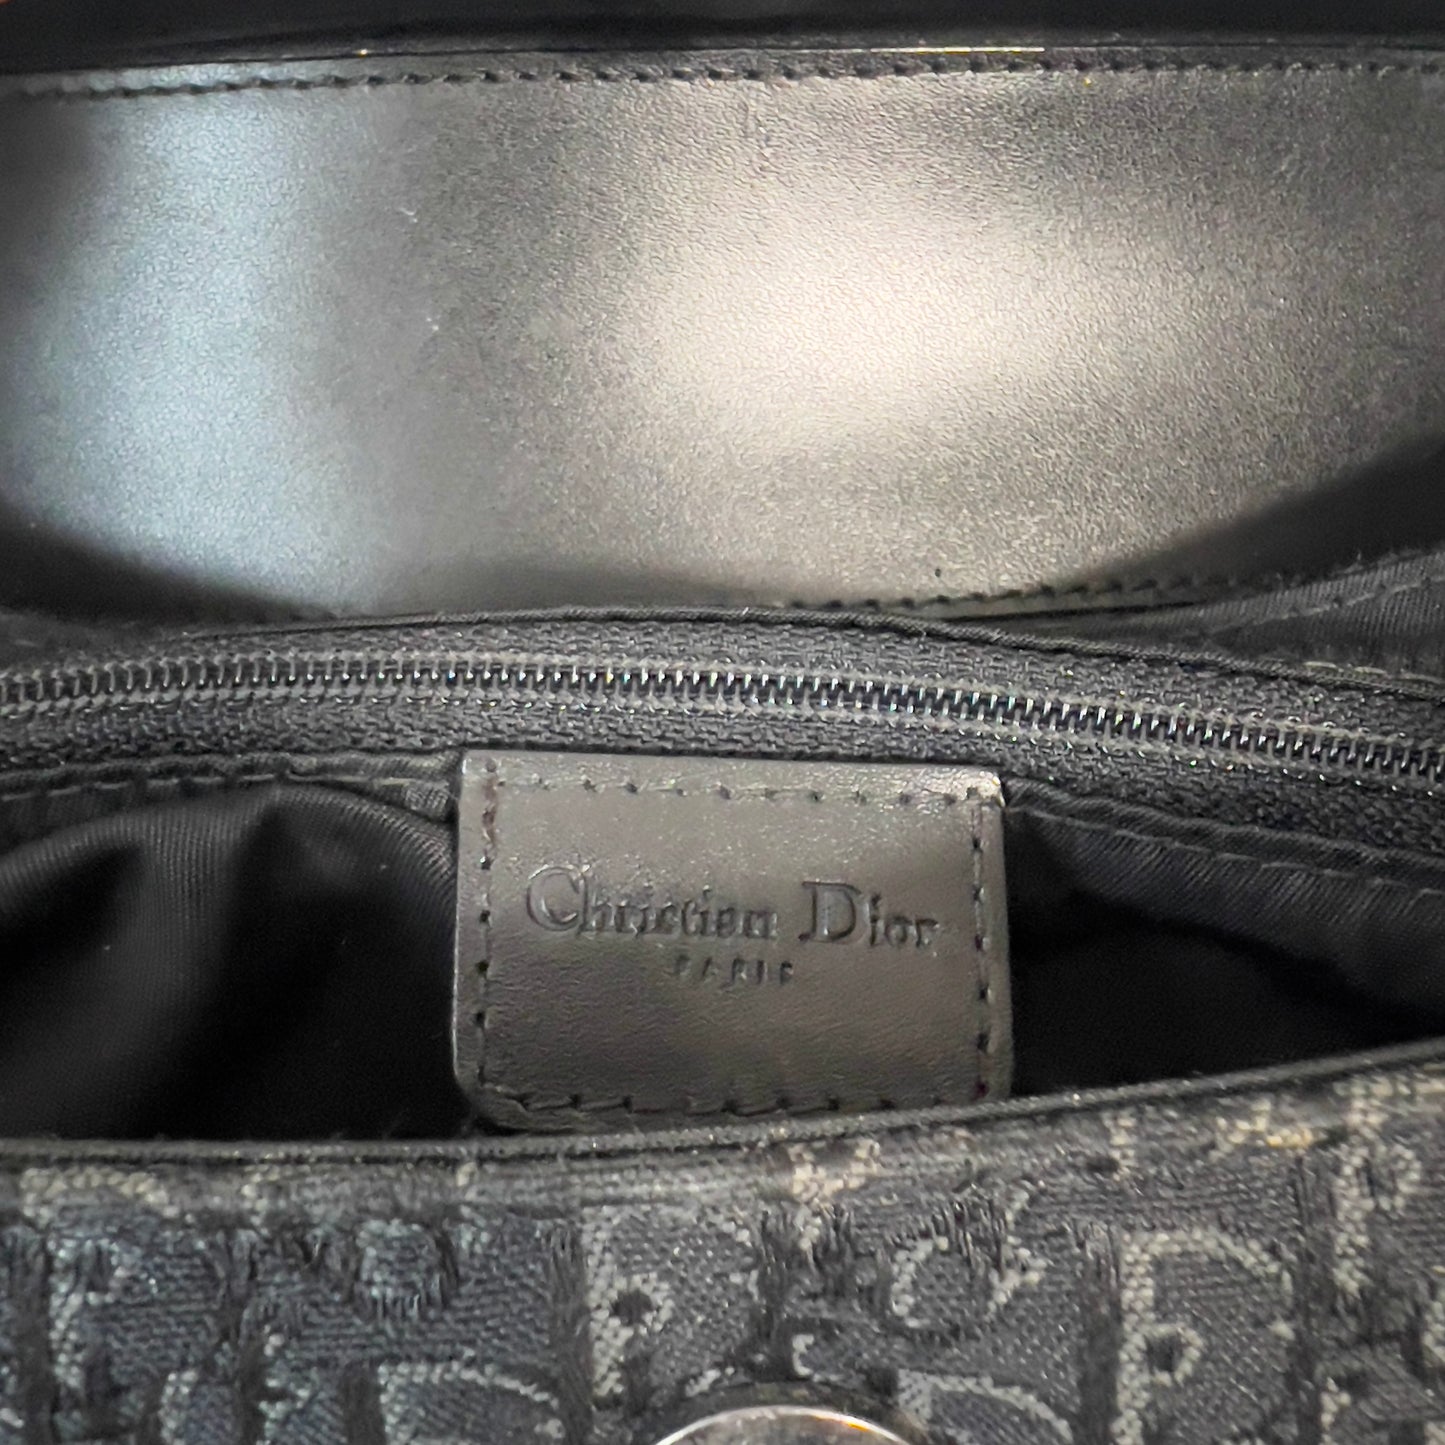 Dior Columbus bag by John Galliano